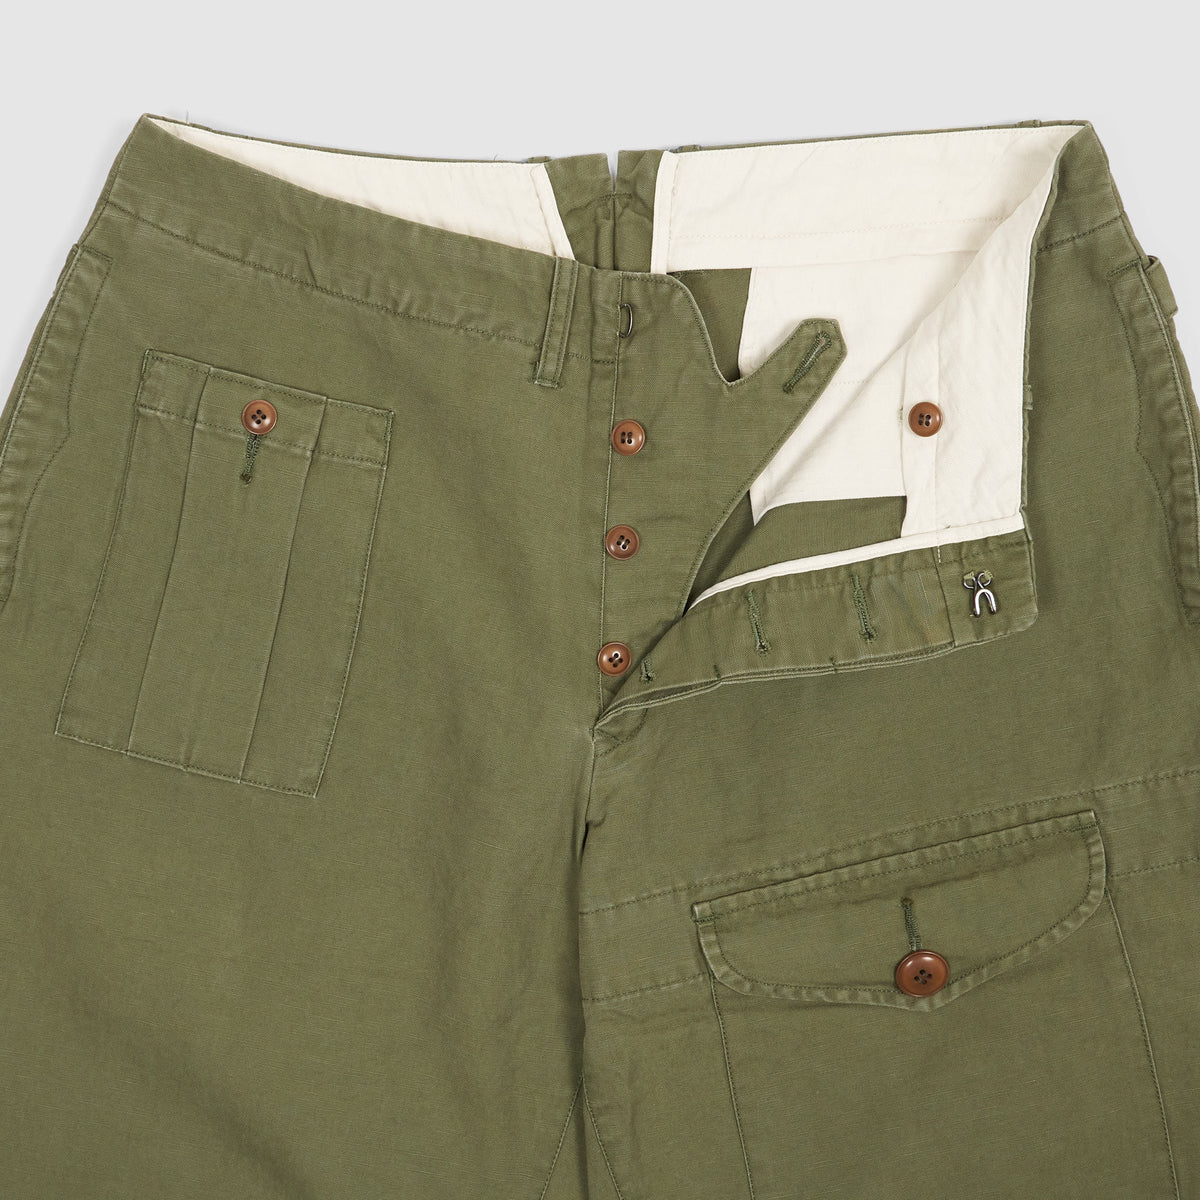 Shop BLACKTAILOR Unisex Street Style Plain Cotton Military Cargo Pants (N30  CARGO SAND, N30 CARGO SAND) by ClassyVision | BUYMA